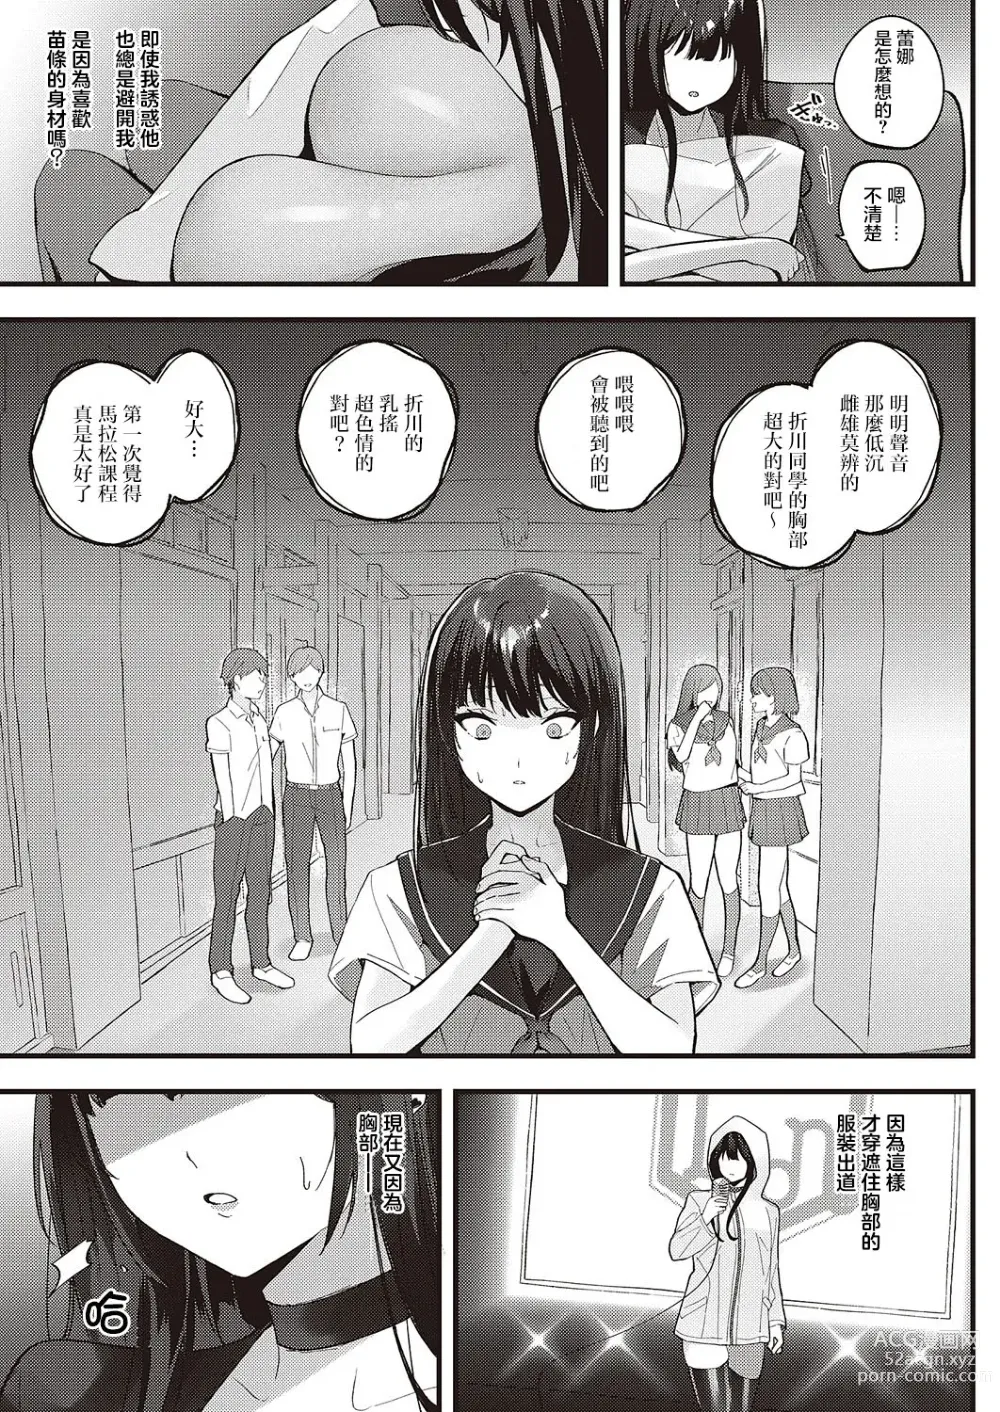 Page 7 of manga Cool Voice wa Kimi no Tame